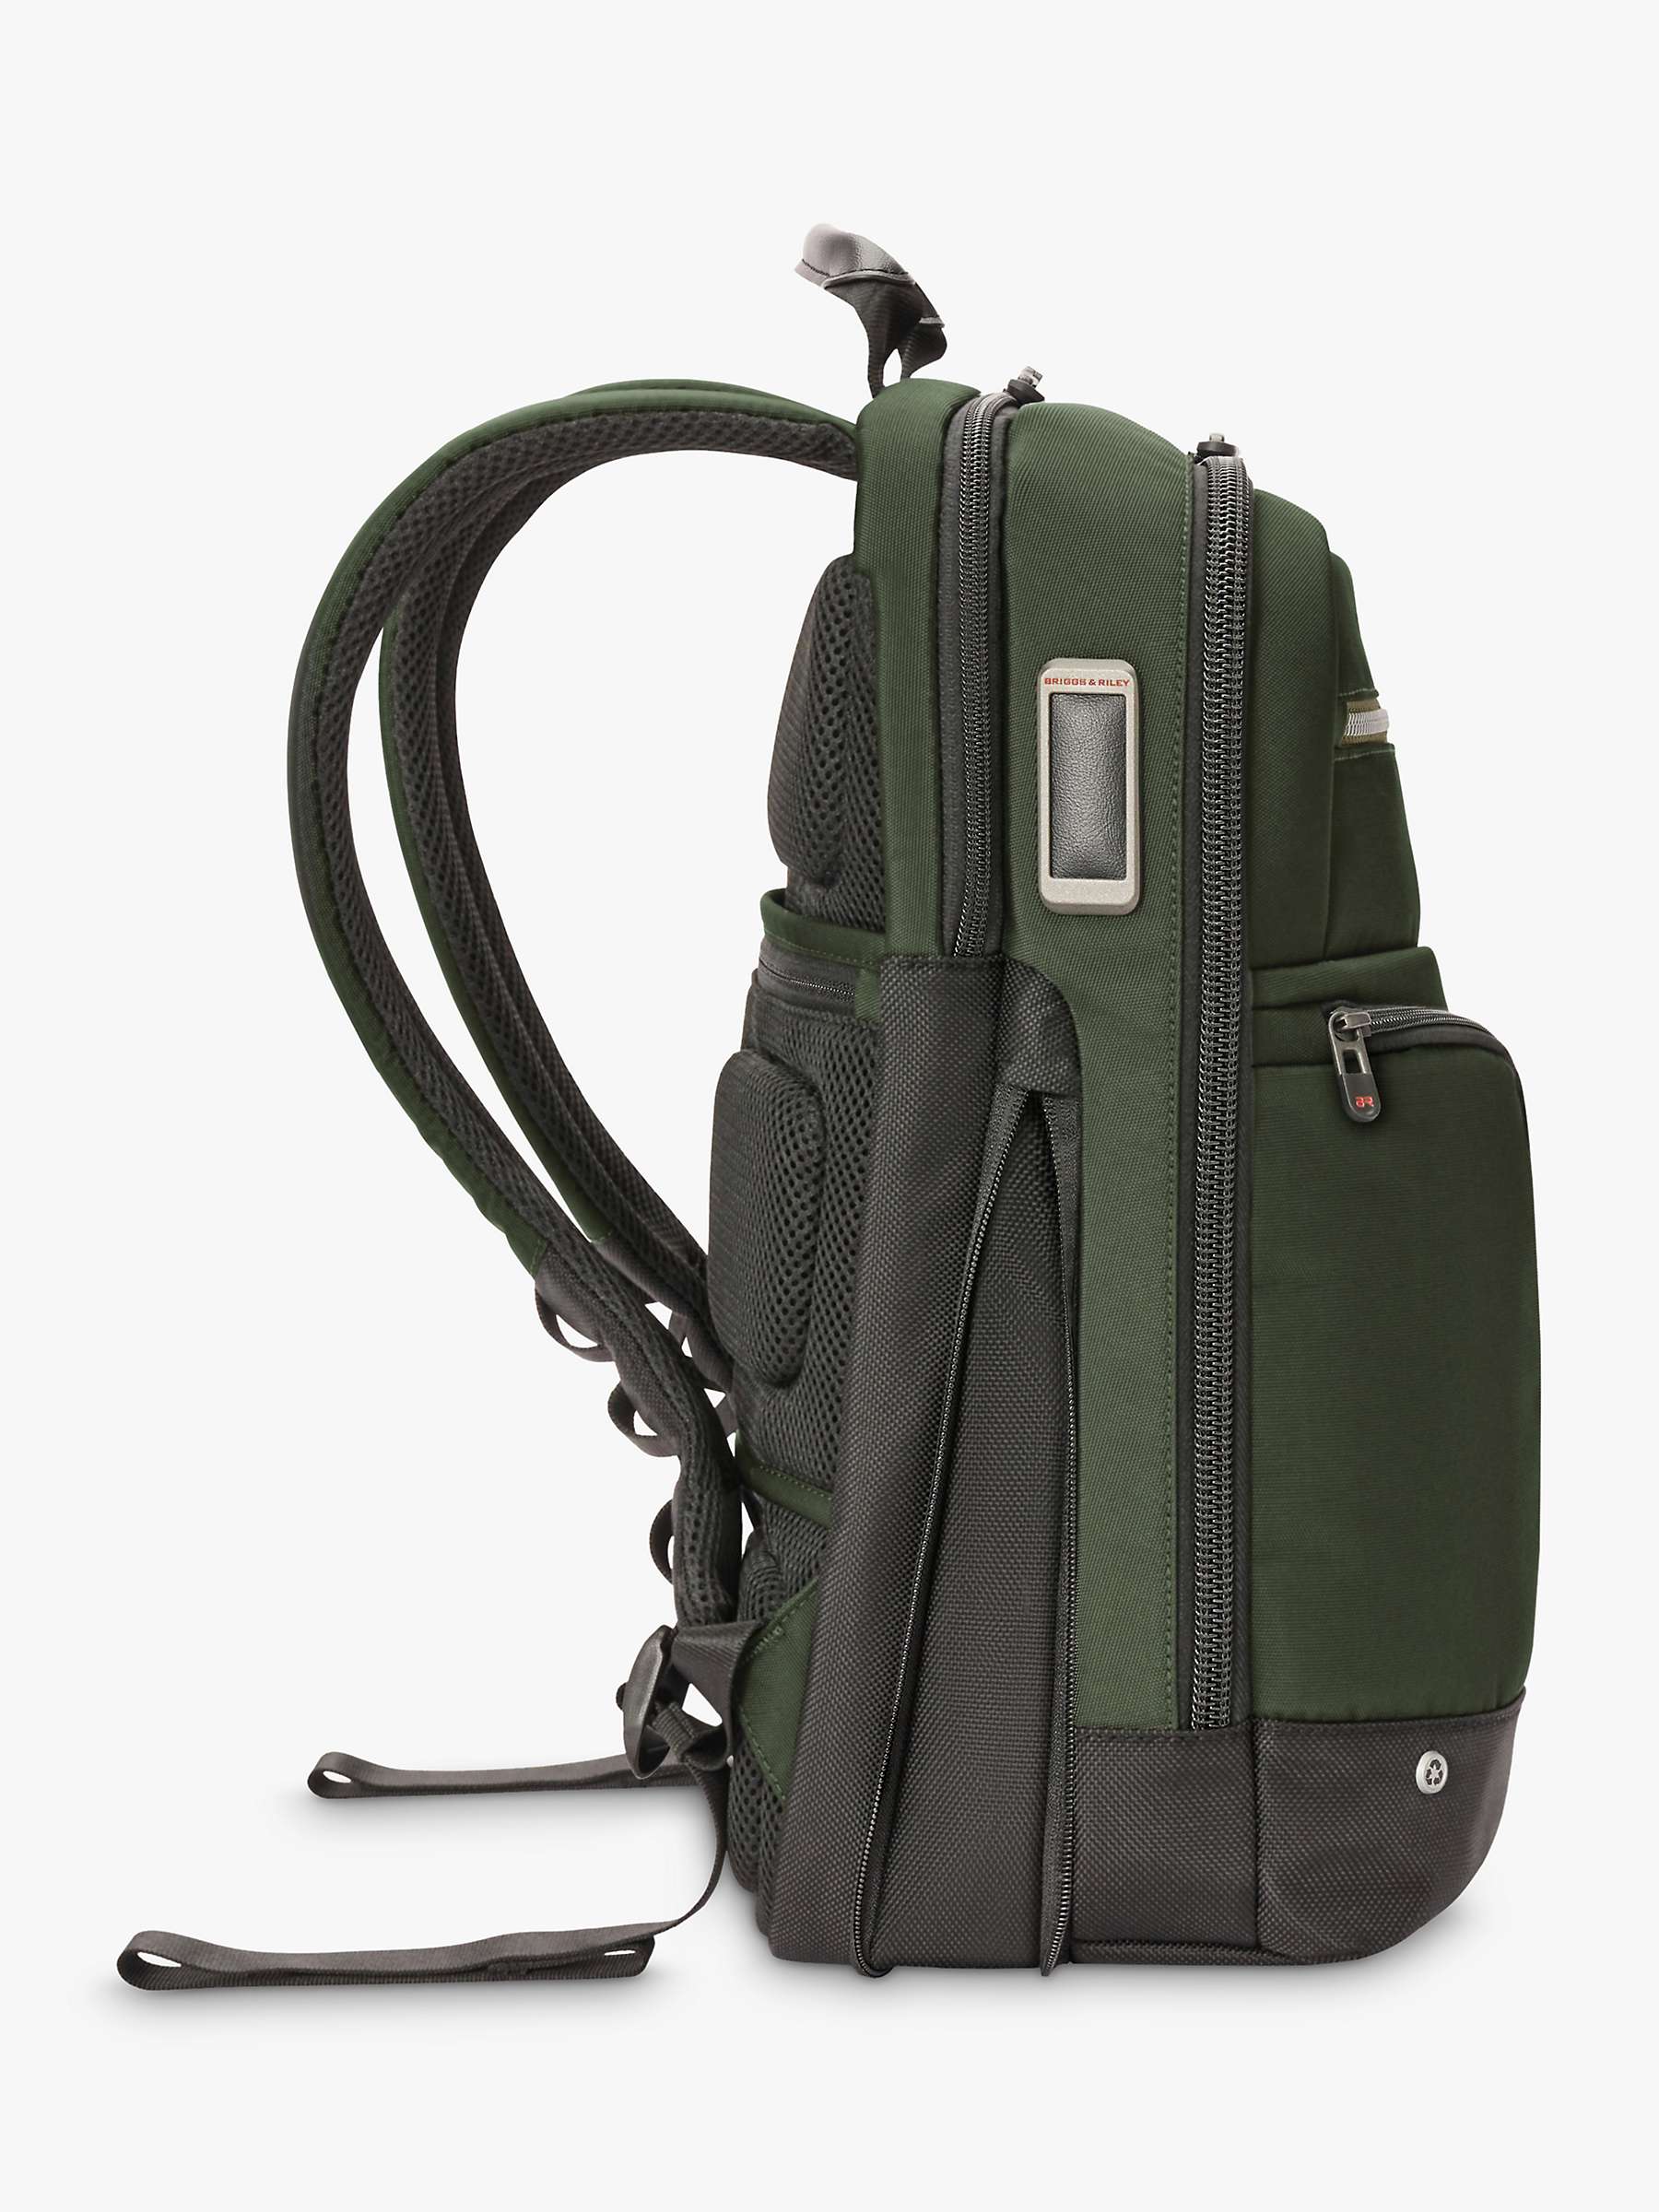 Buy Briggs & Riley HTA Slim Expandable Backpack Online at johnlewis.com